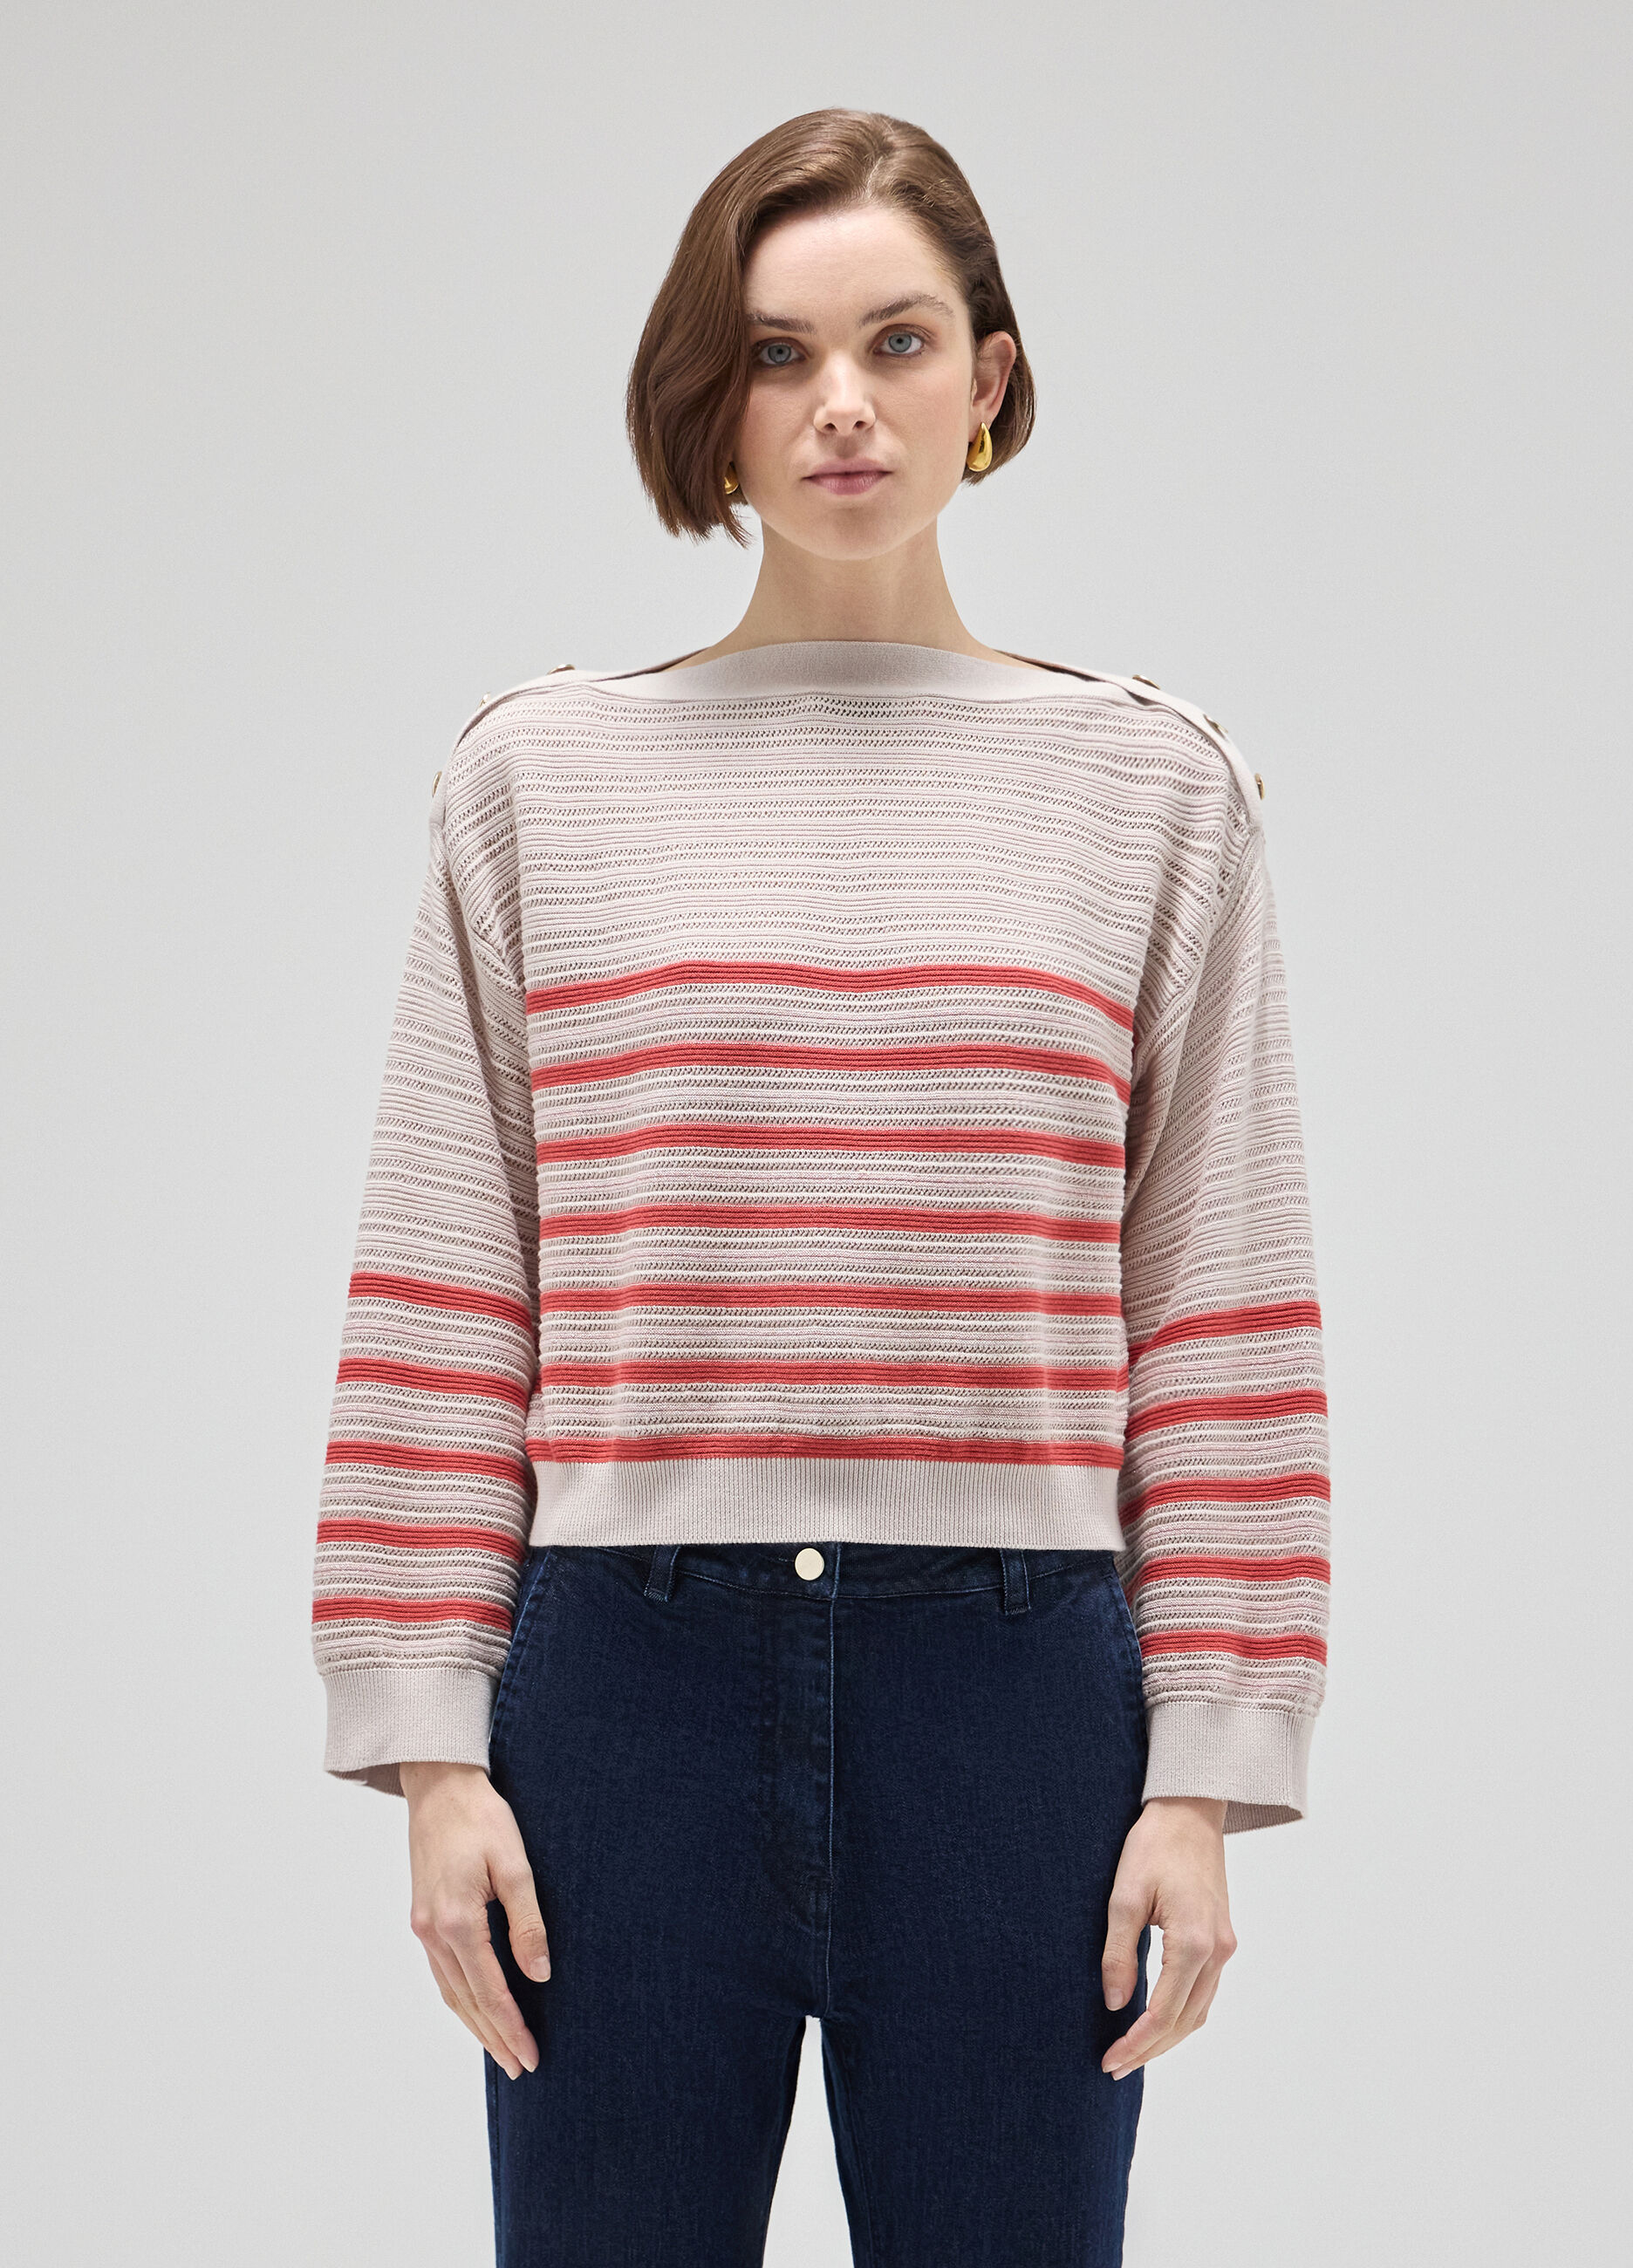 Maglione tricot mix di punti